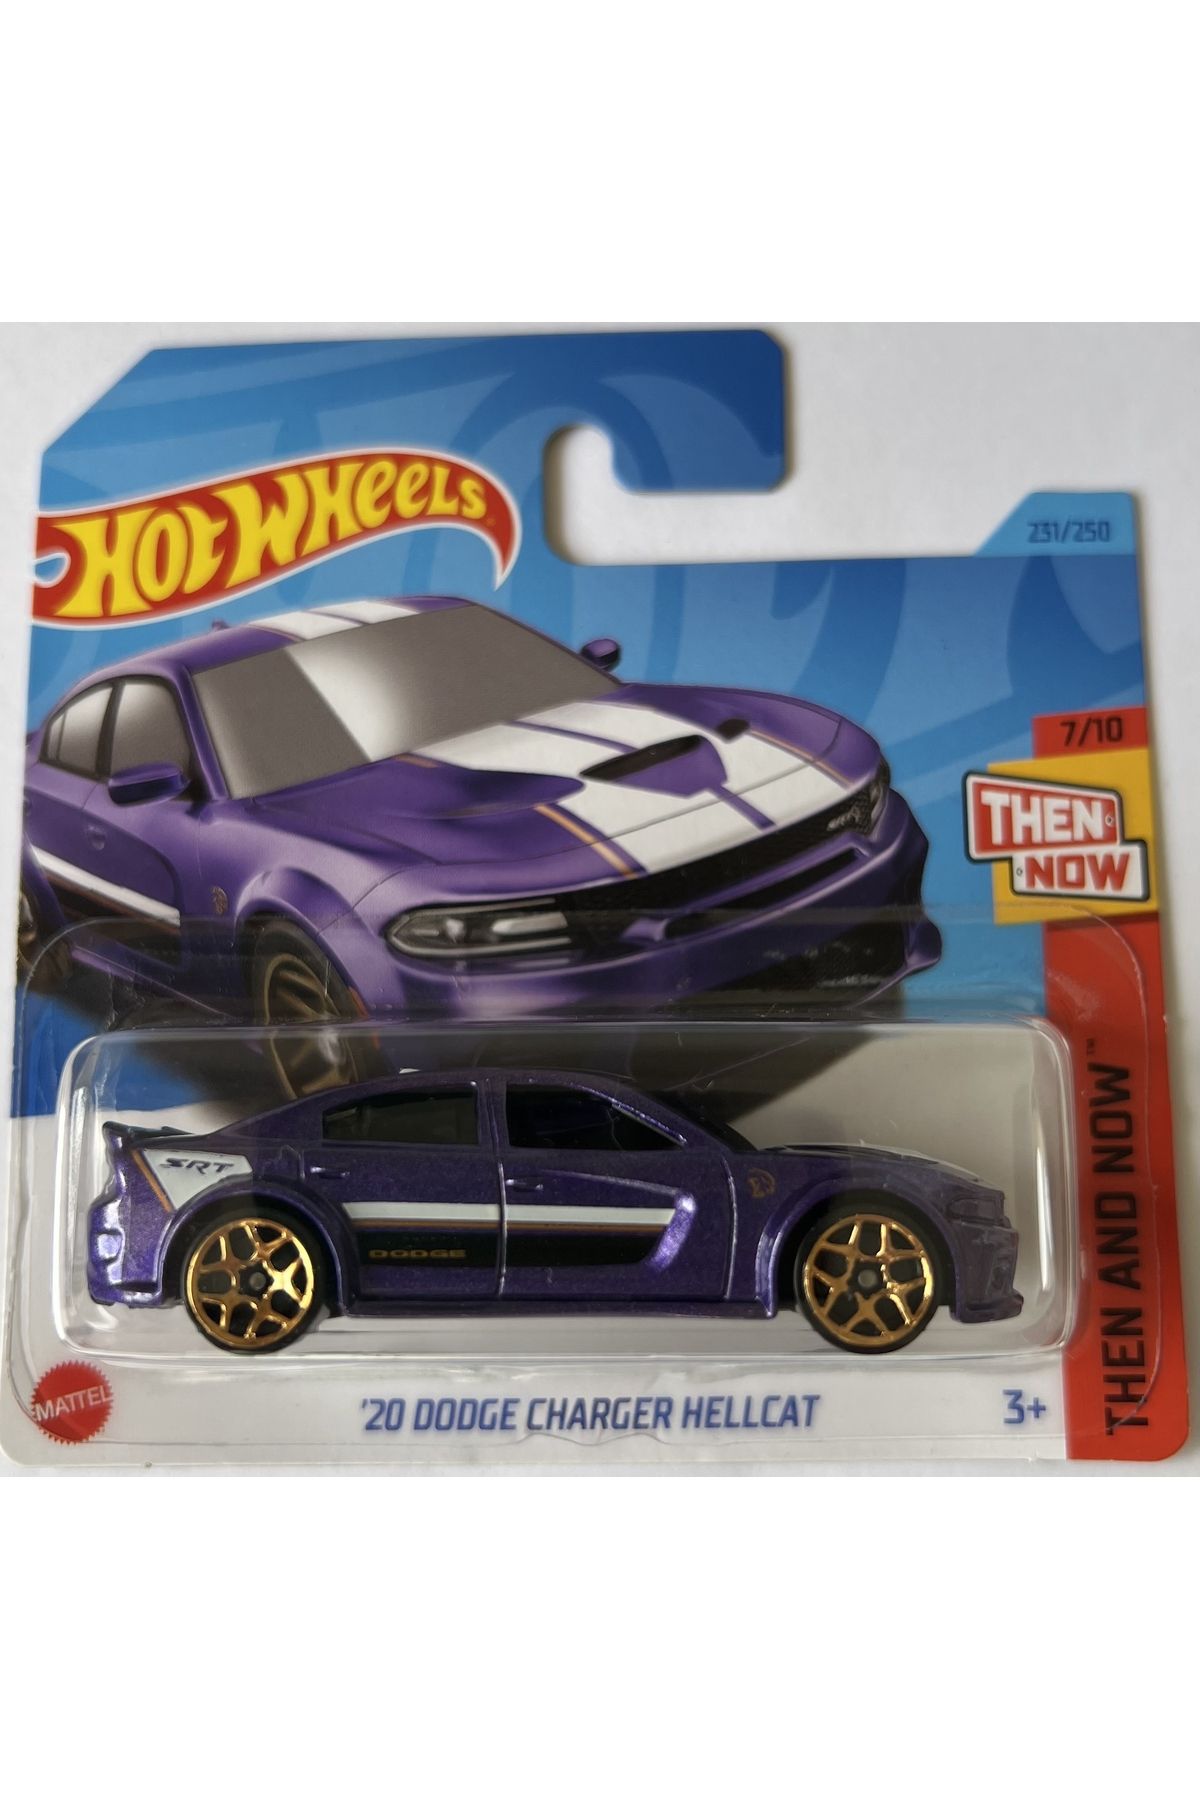 HOT WHEELS 20 Dodge Charger Hellcat